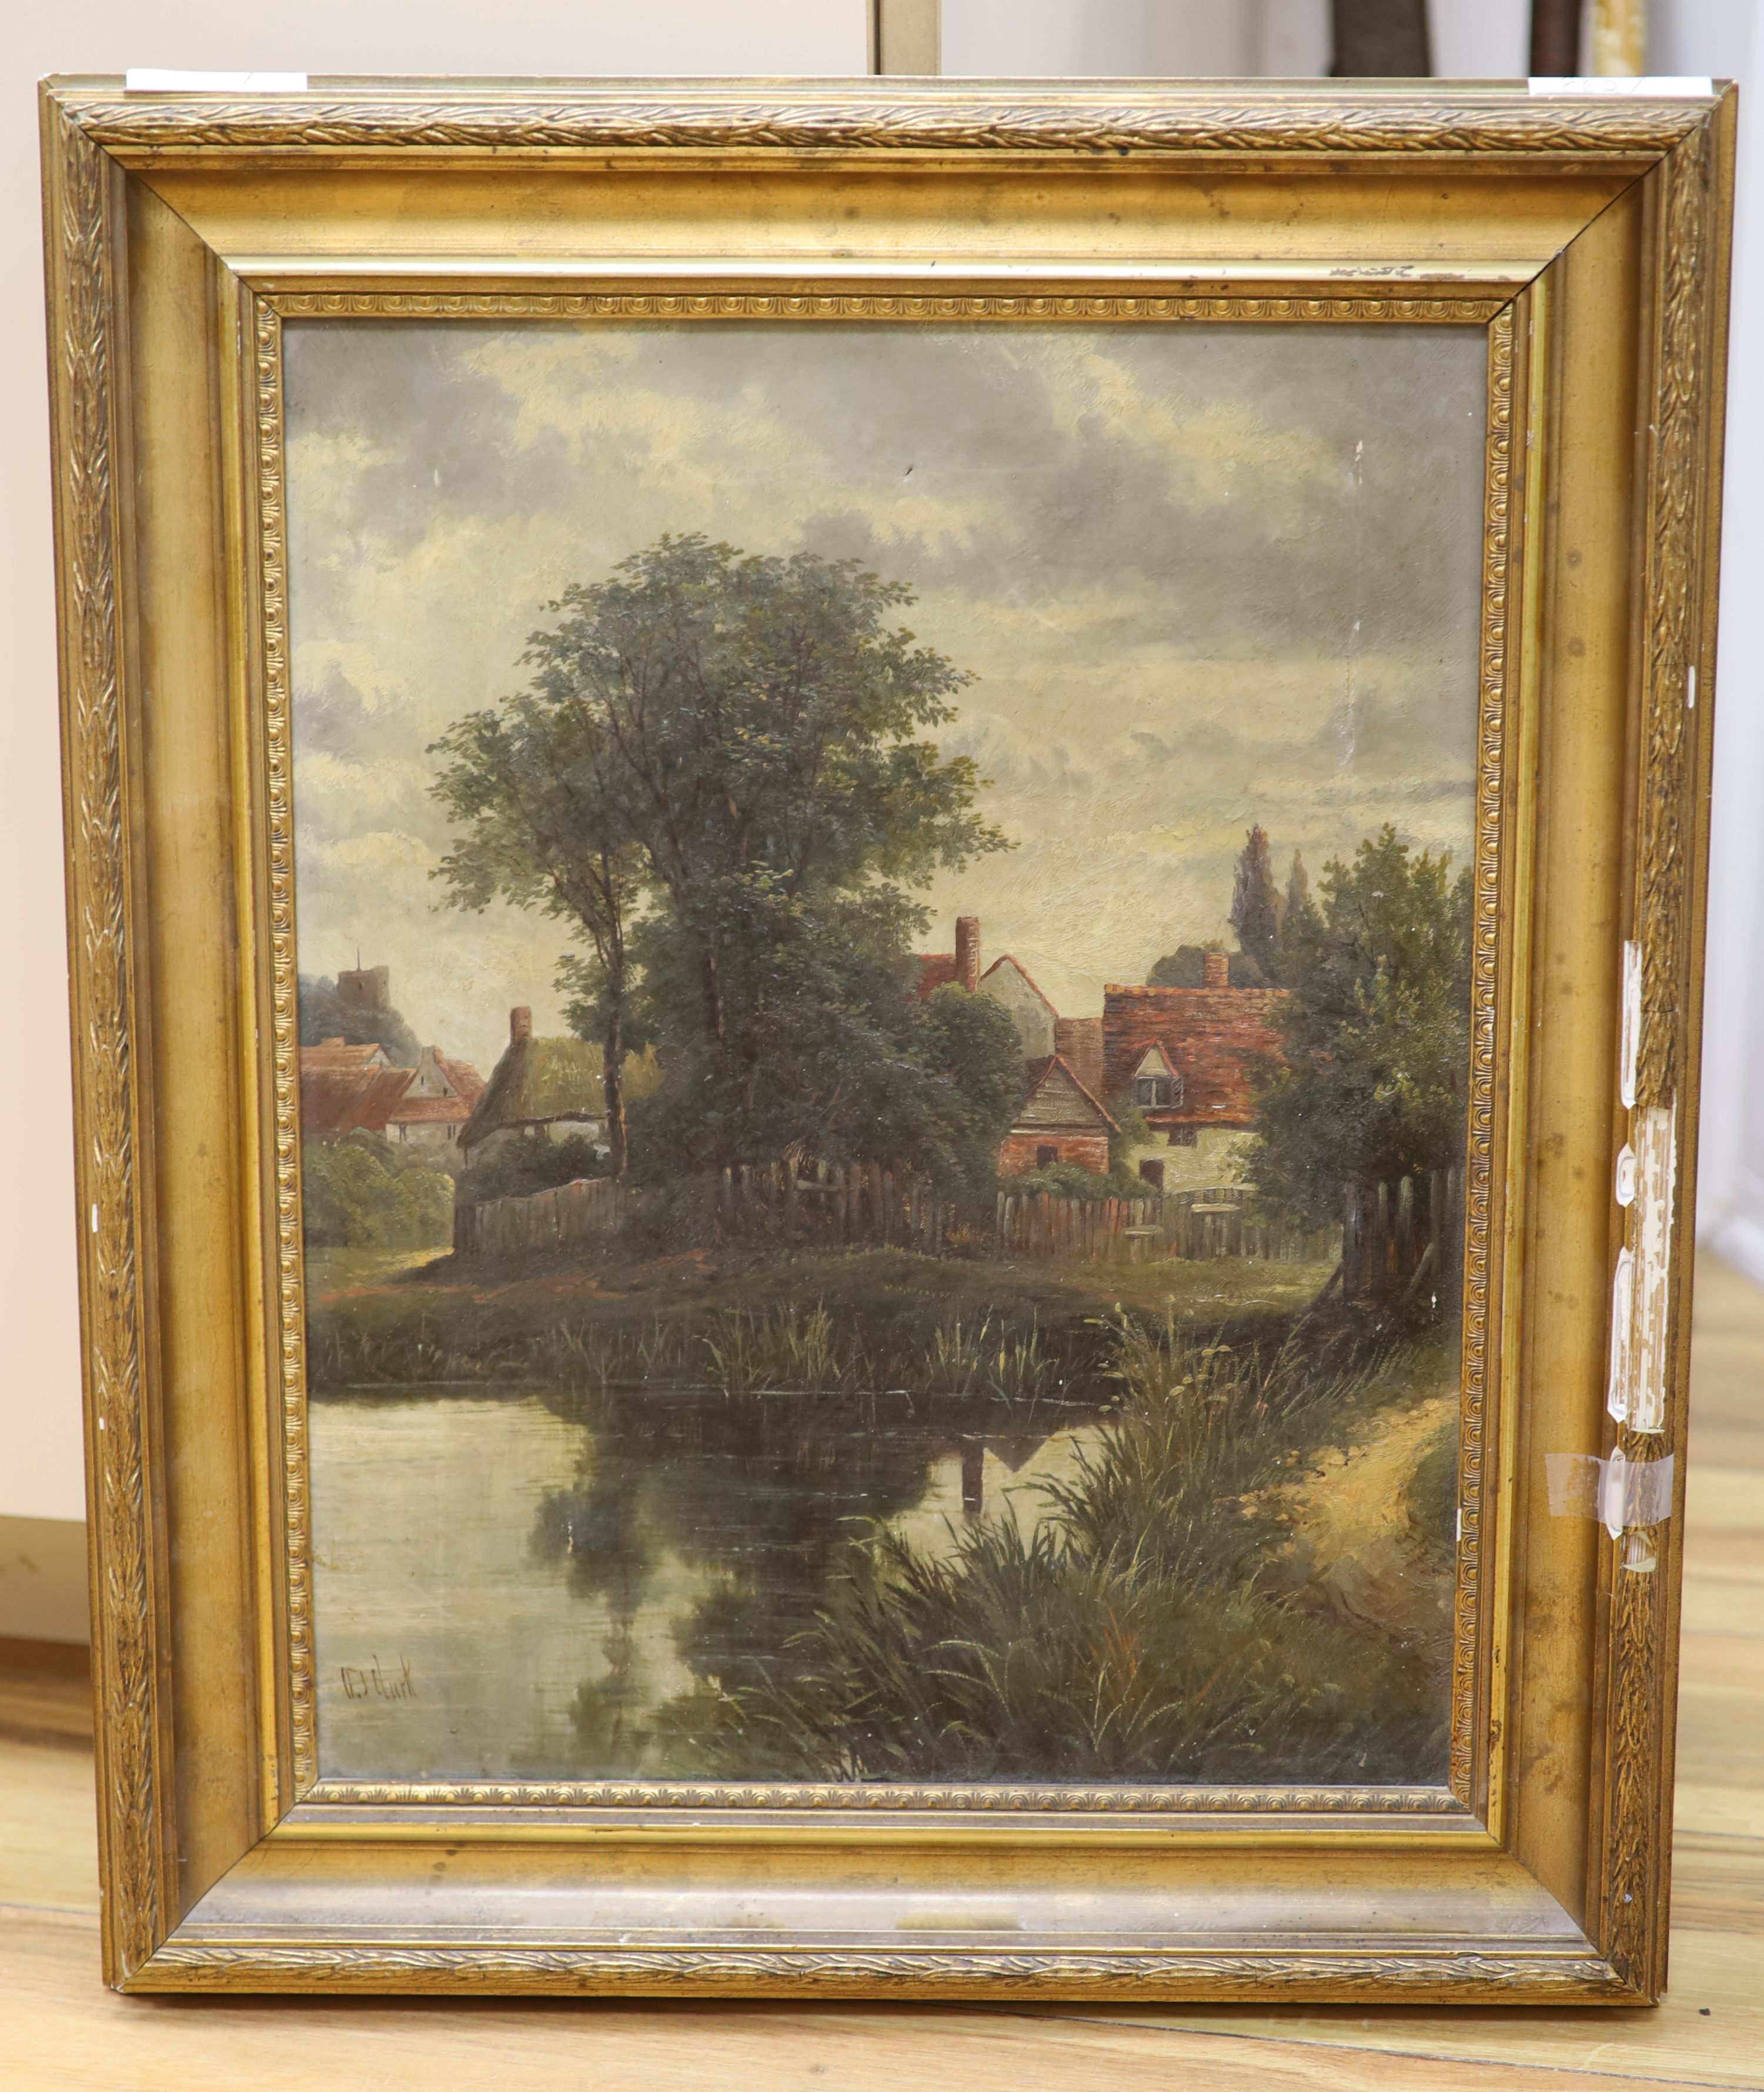 Octavius Thomas Clark (1850-1921), oil on canvas, Waterside houses, signed, 44 x 35cm